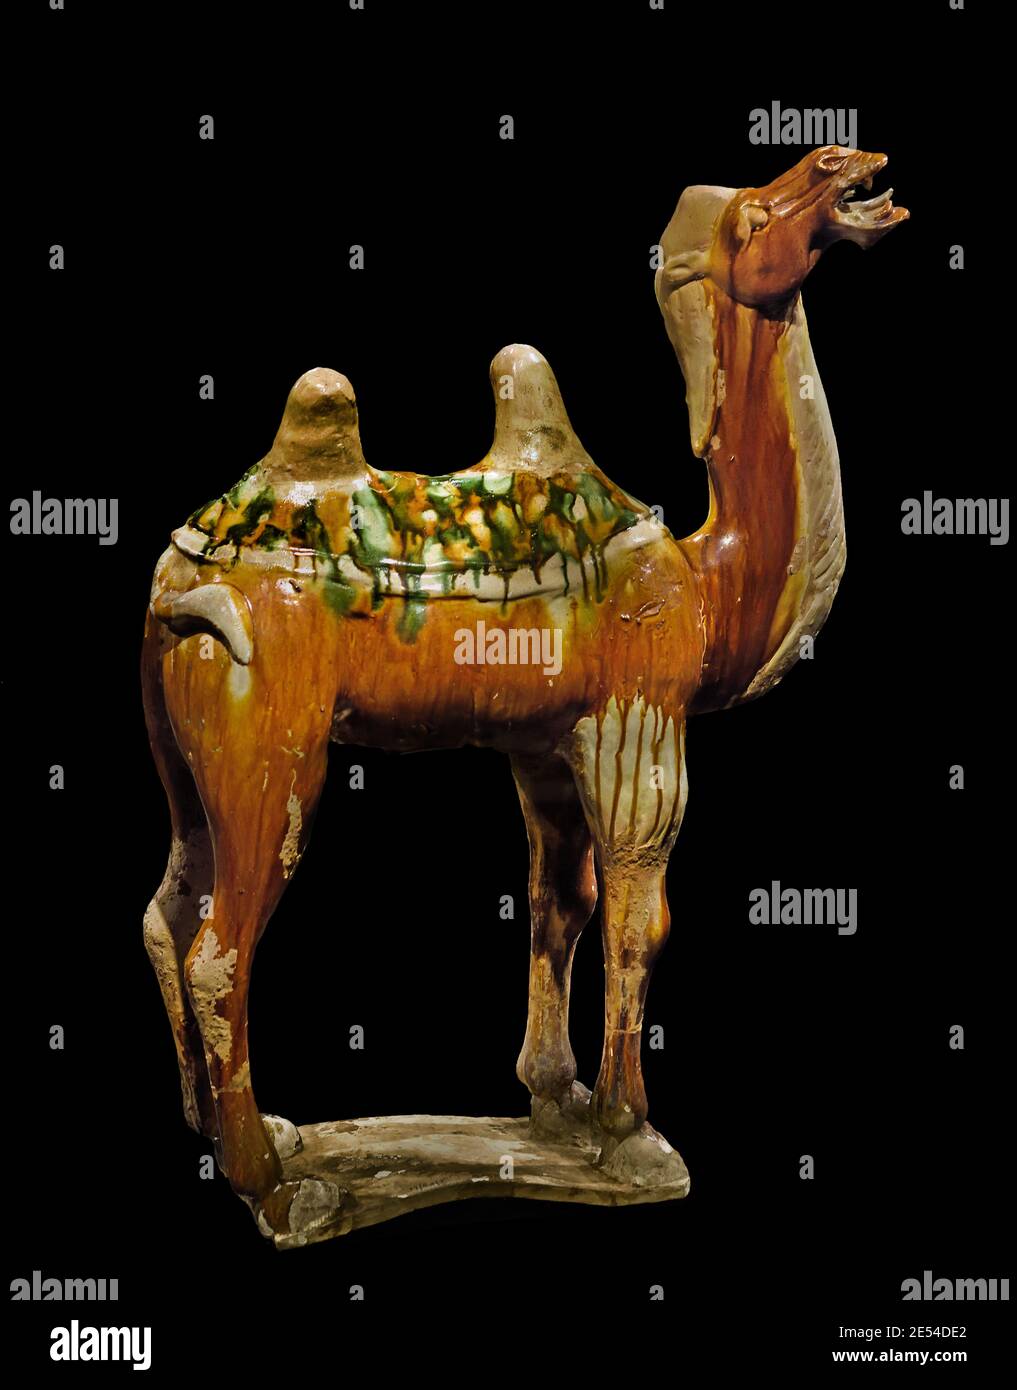 Camel master hi-res stock photography and images - Alamy | Bundfaltenhosen